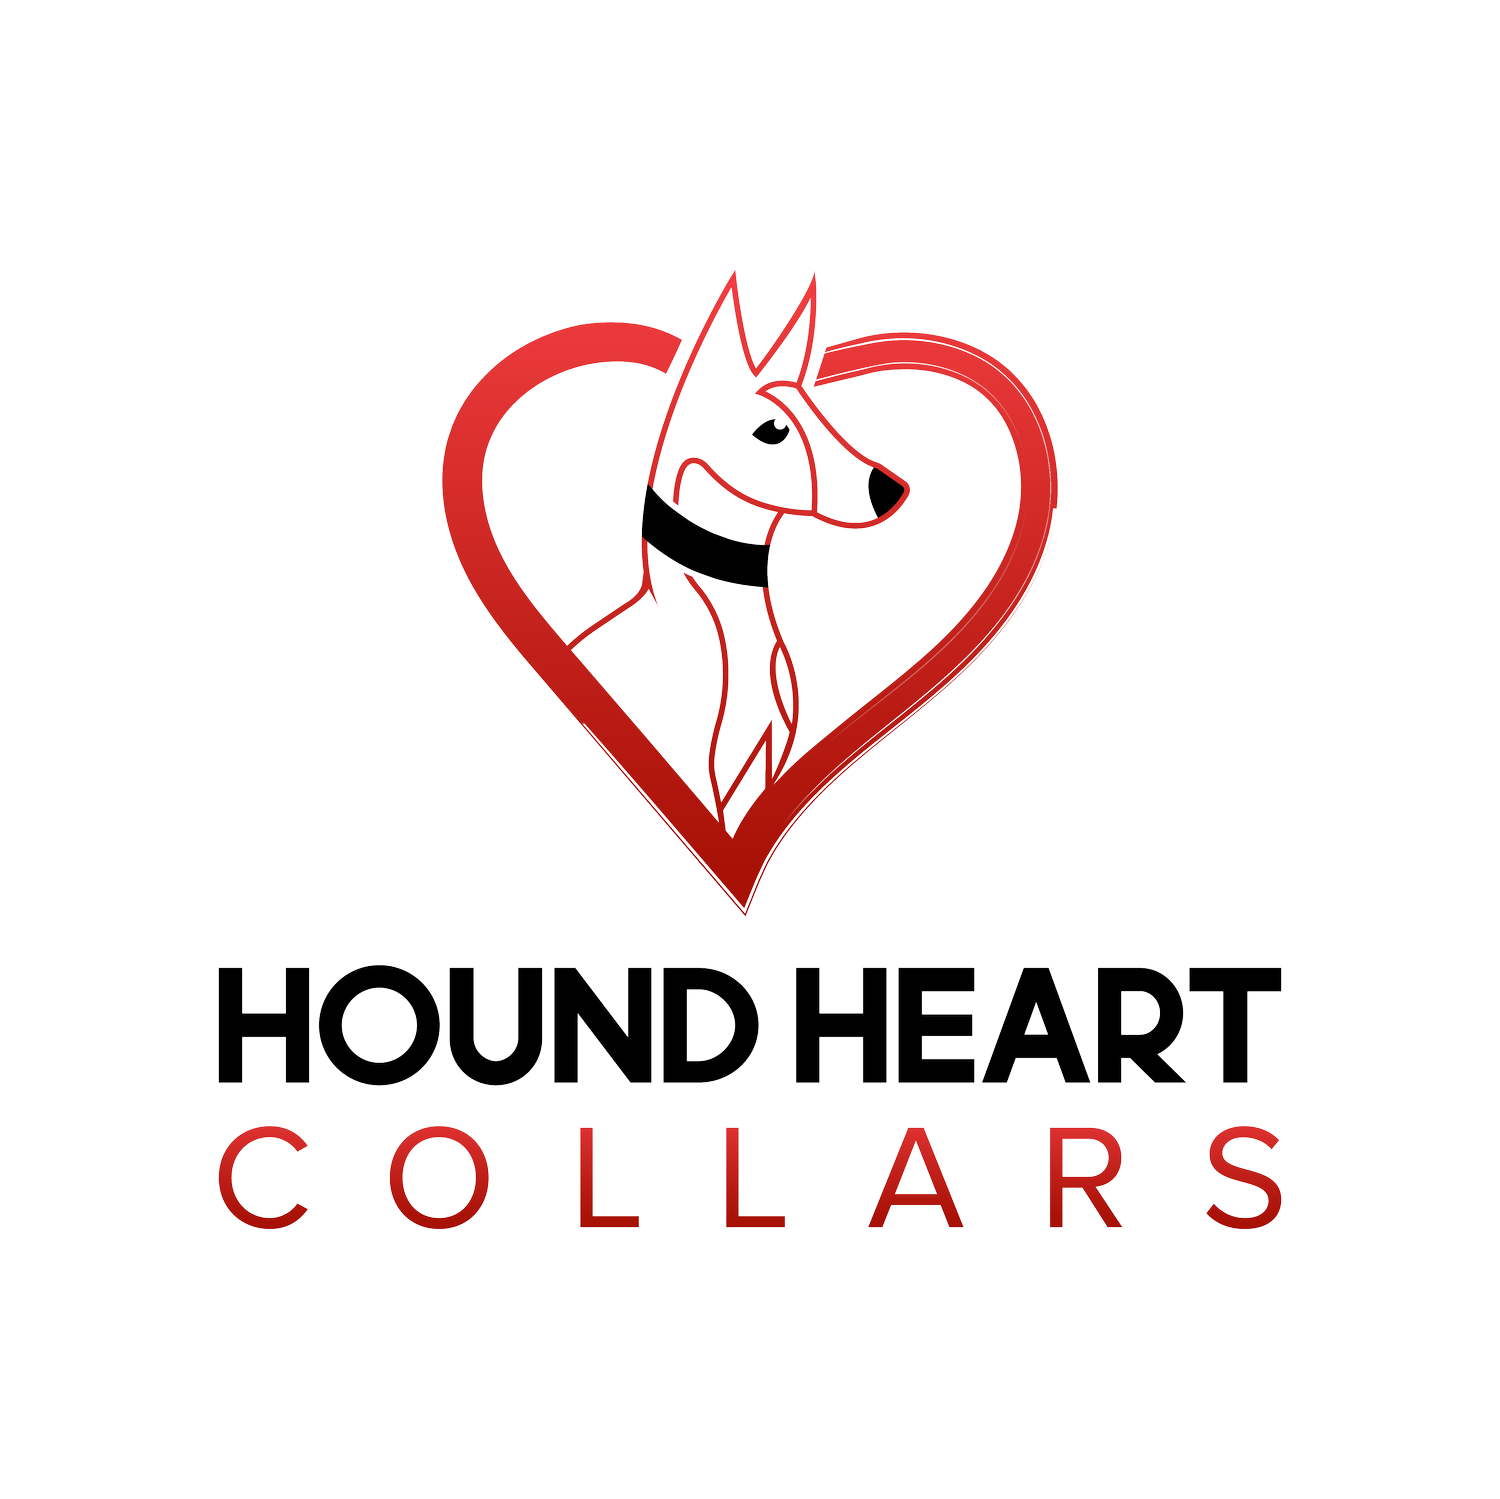 Hound Heart Collars